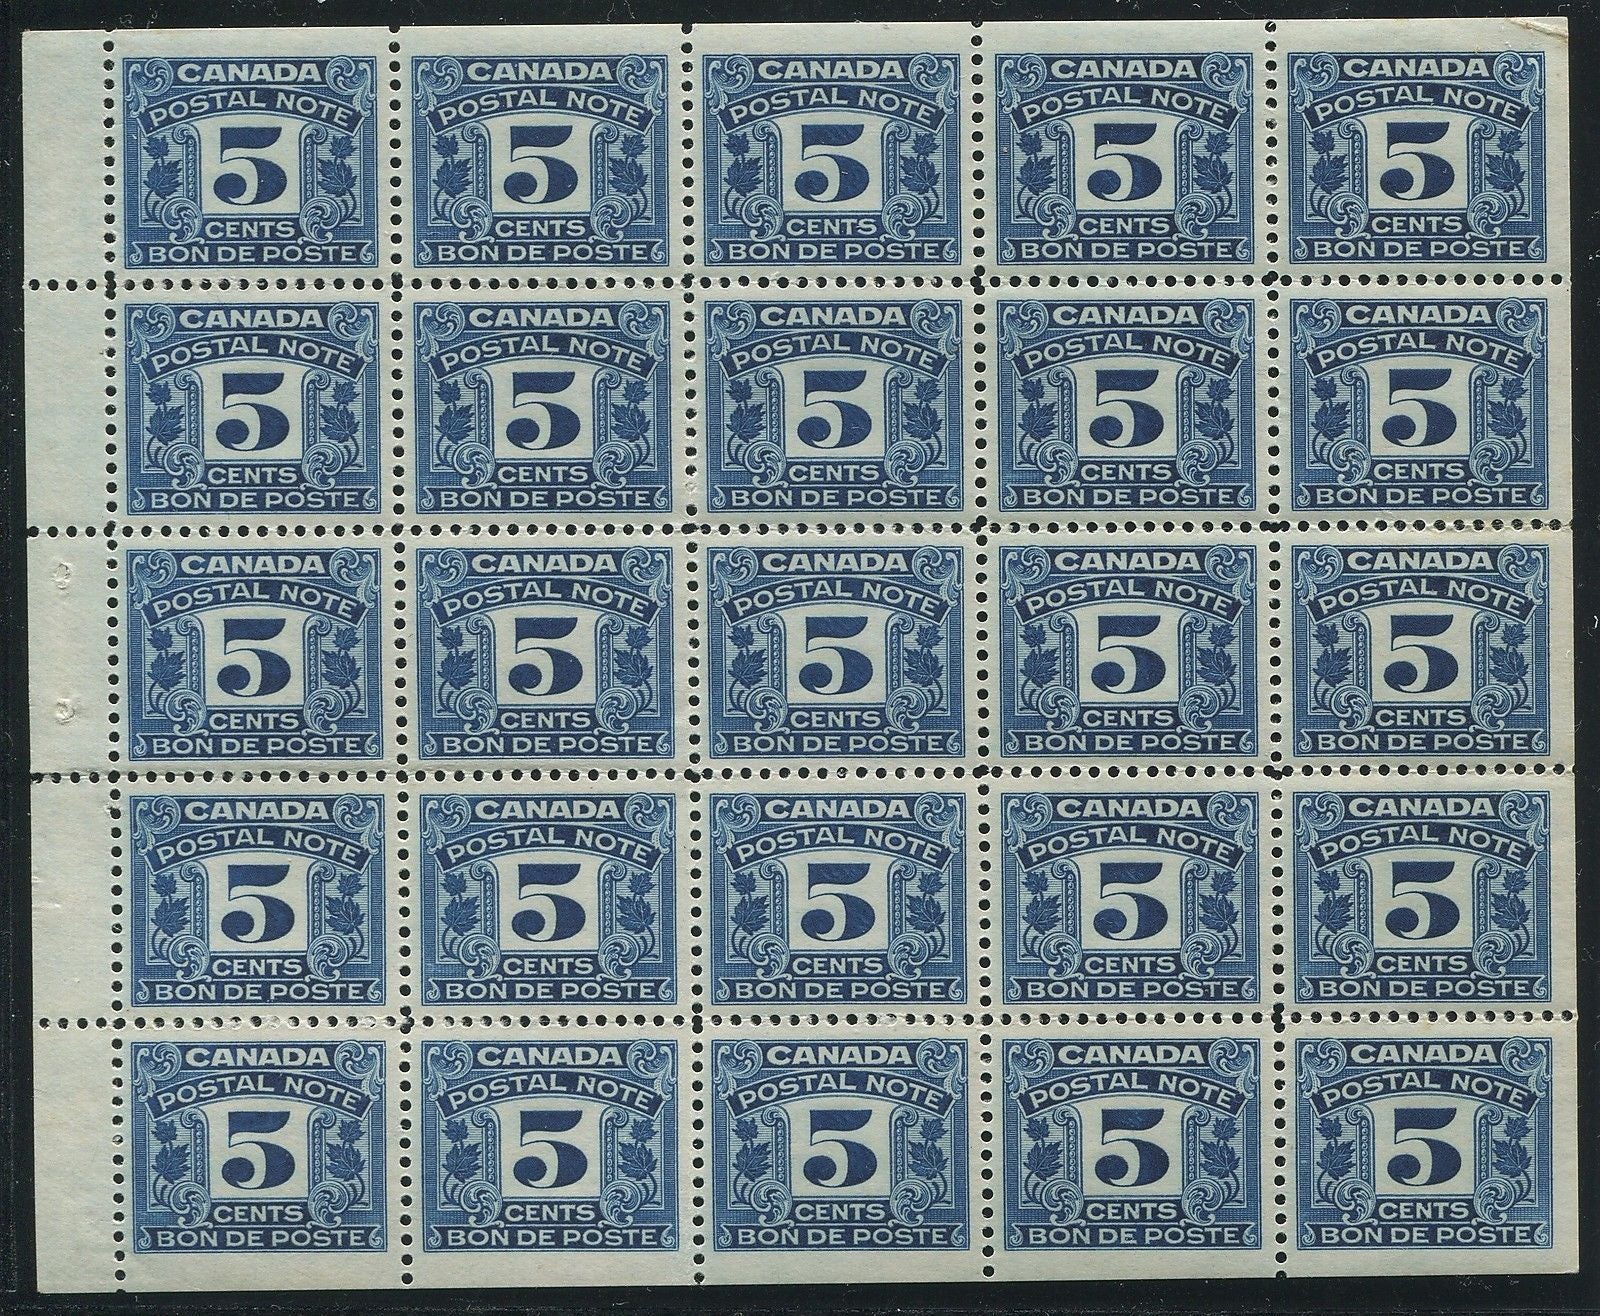 0007PS1708 - FPS7a - Mint Booklet Pane - Deveney Stamps Ltd. Canadian Stamps